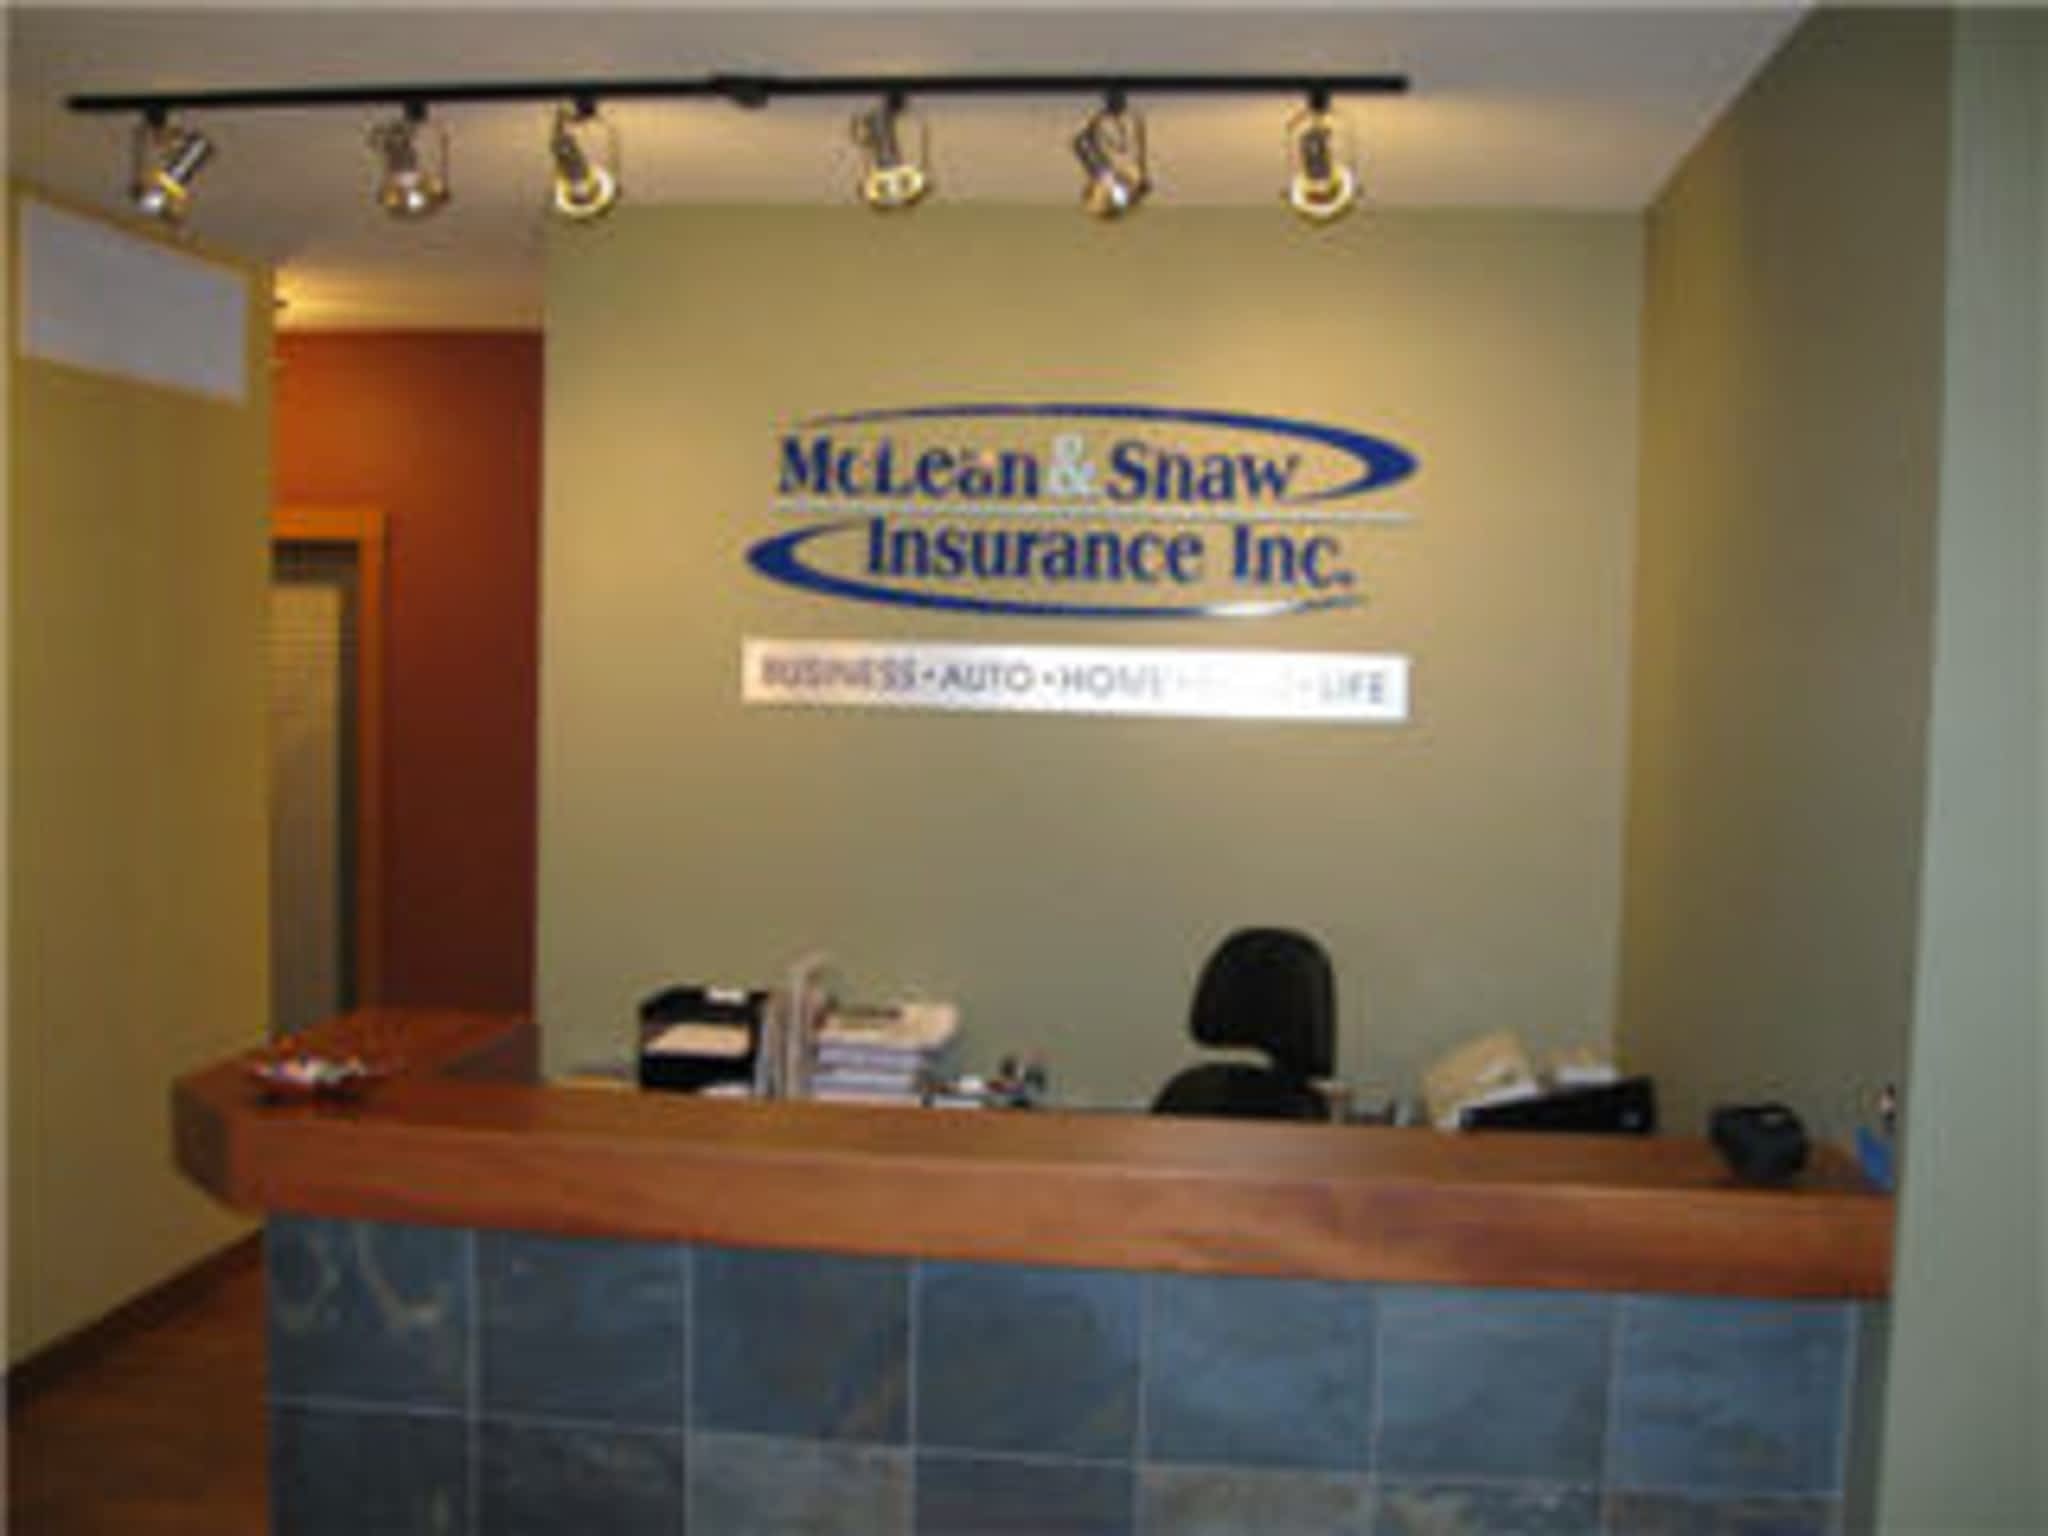 photo Rogers McLean Shaw Insurance Brokers Ltd